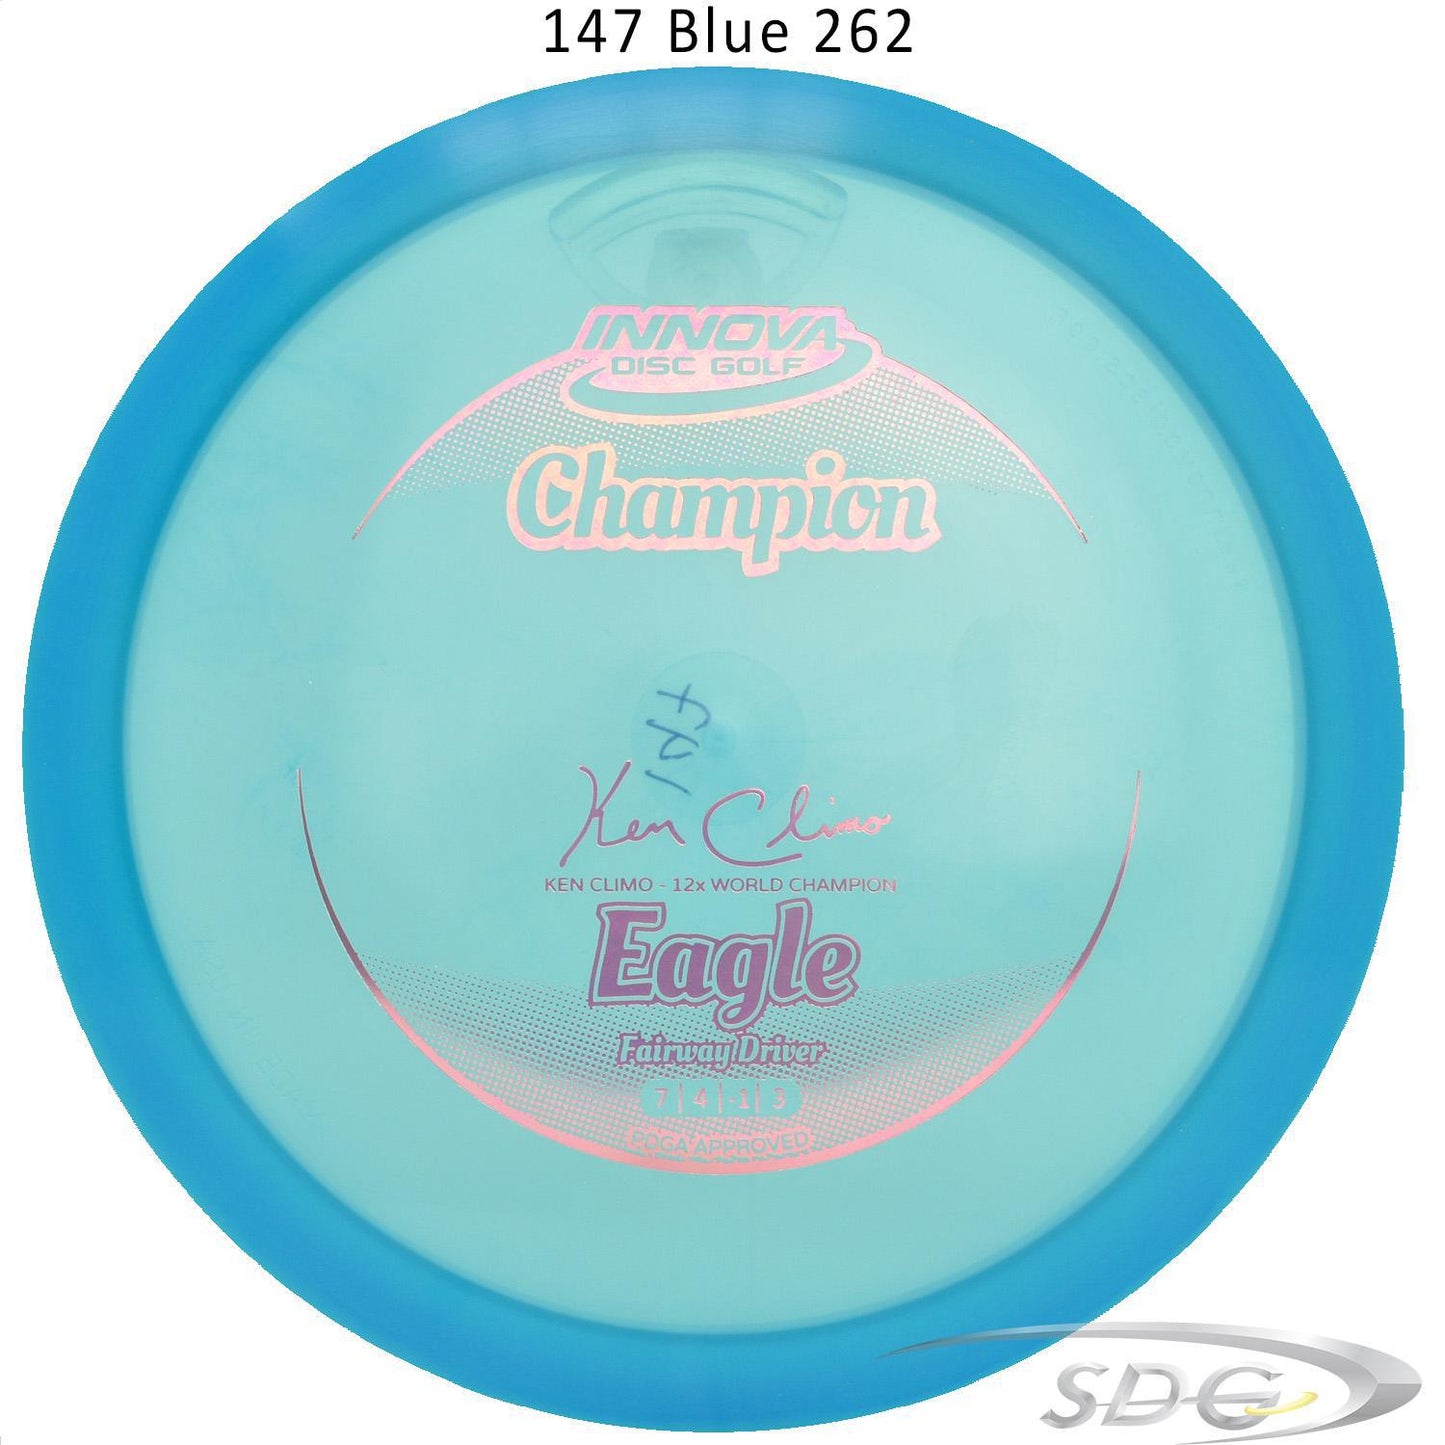 innova-champion-eagle-disc-golf-fairway-driver 147 Blue 262 